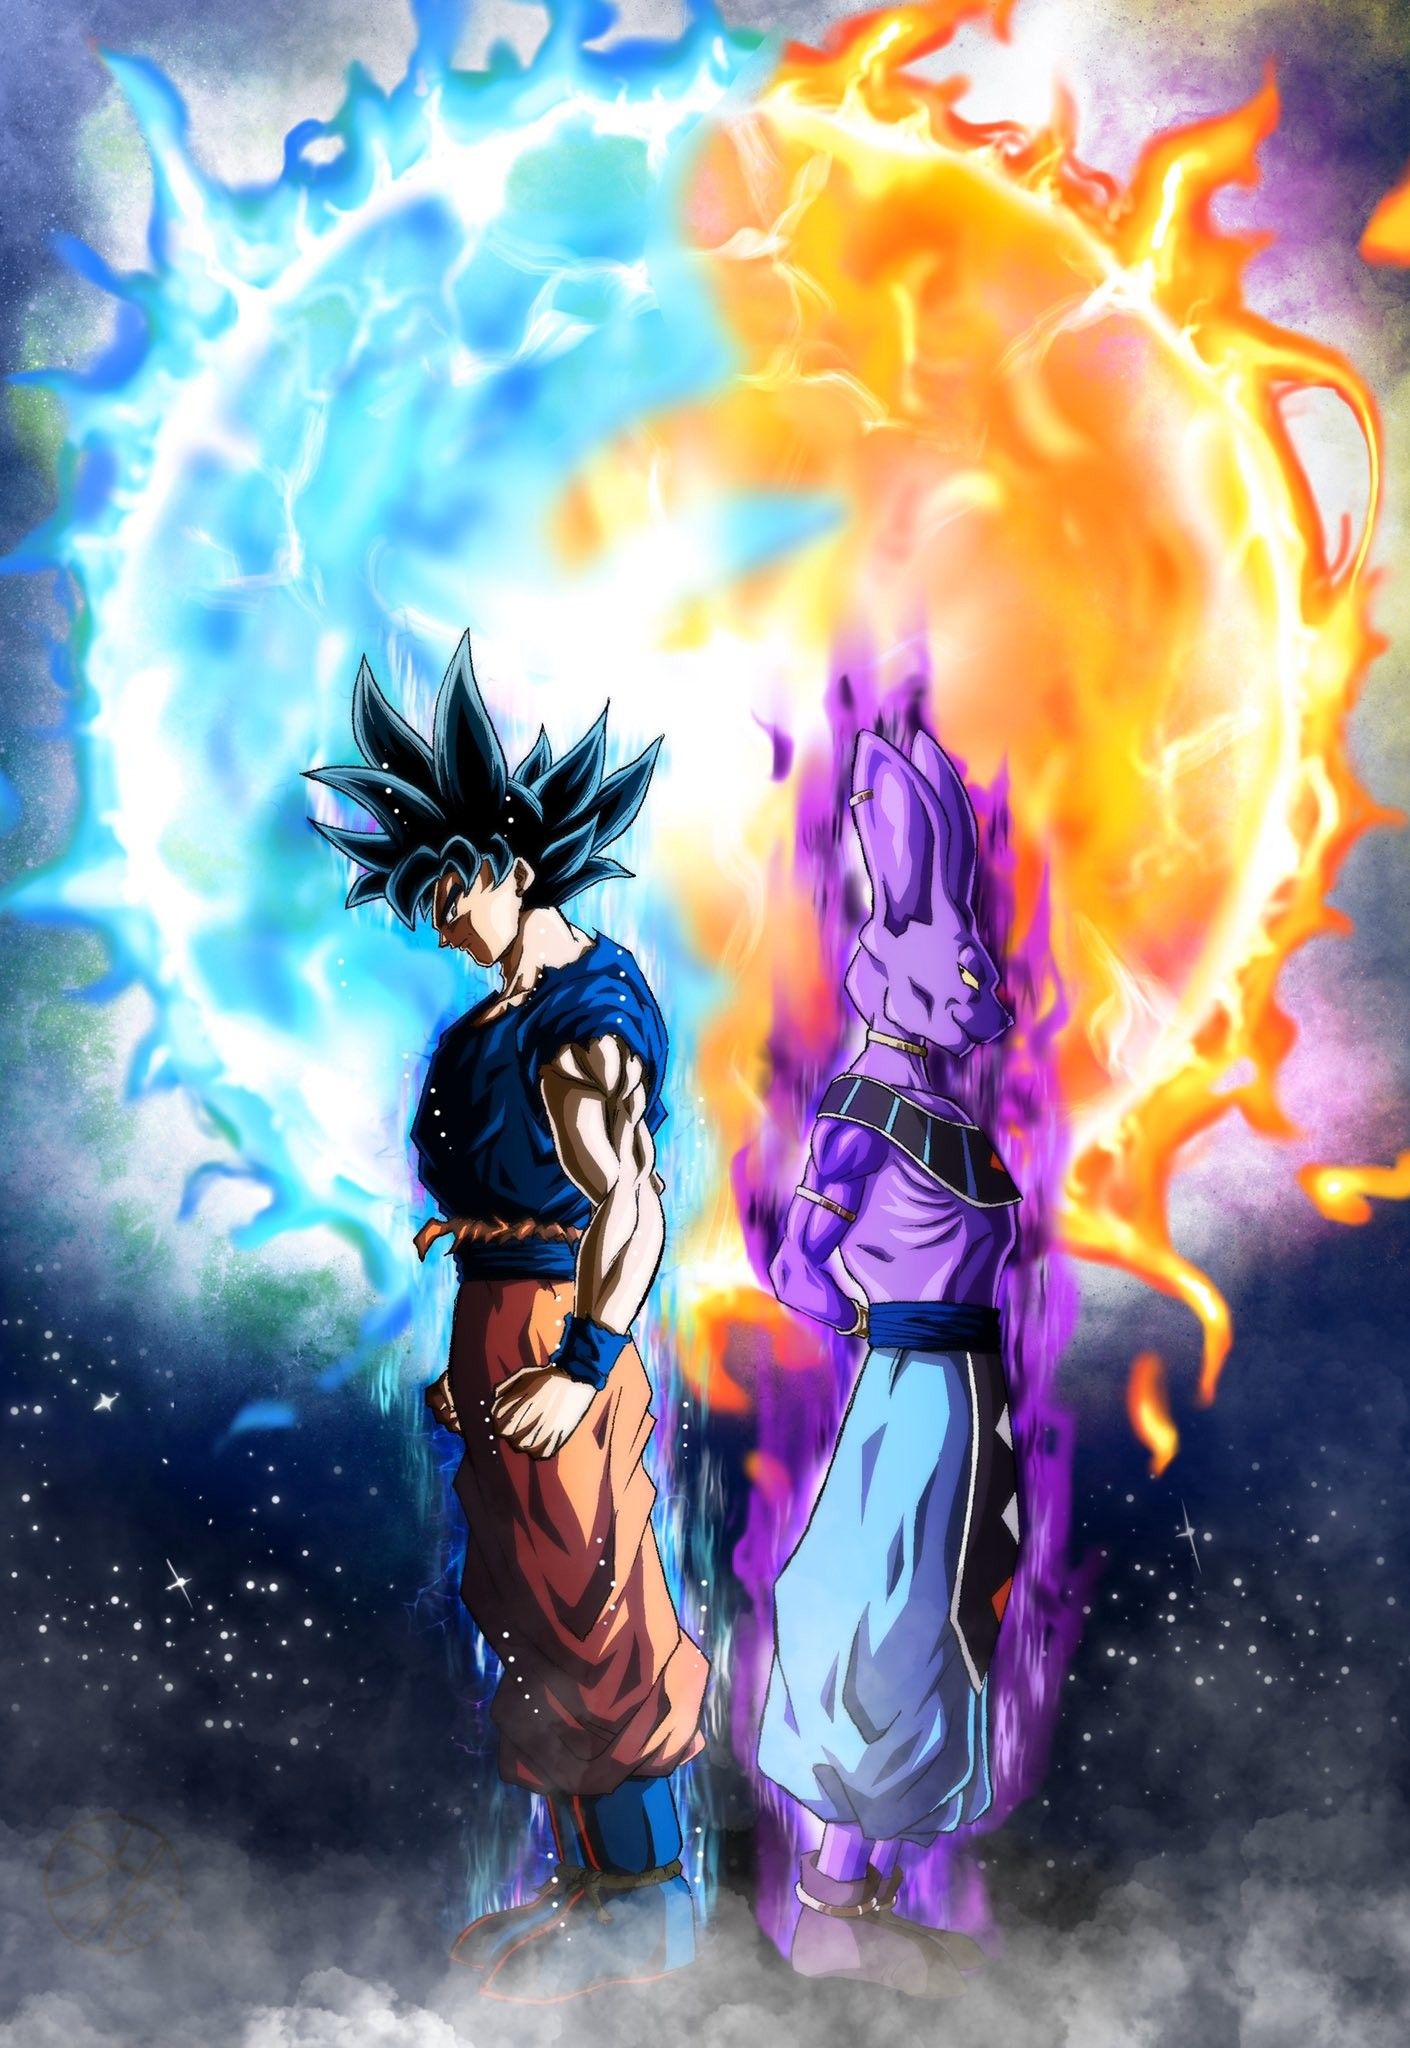 Goku vs Lord Beerus Wallpaper Free Goku vs Lord Beerus Background